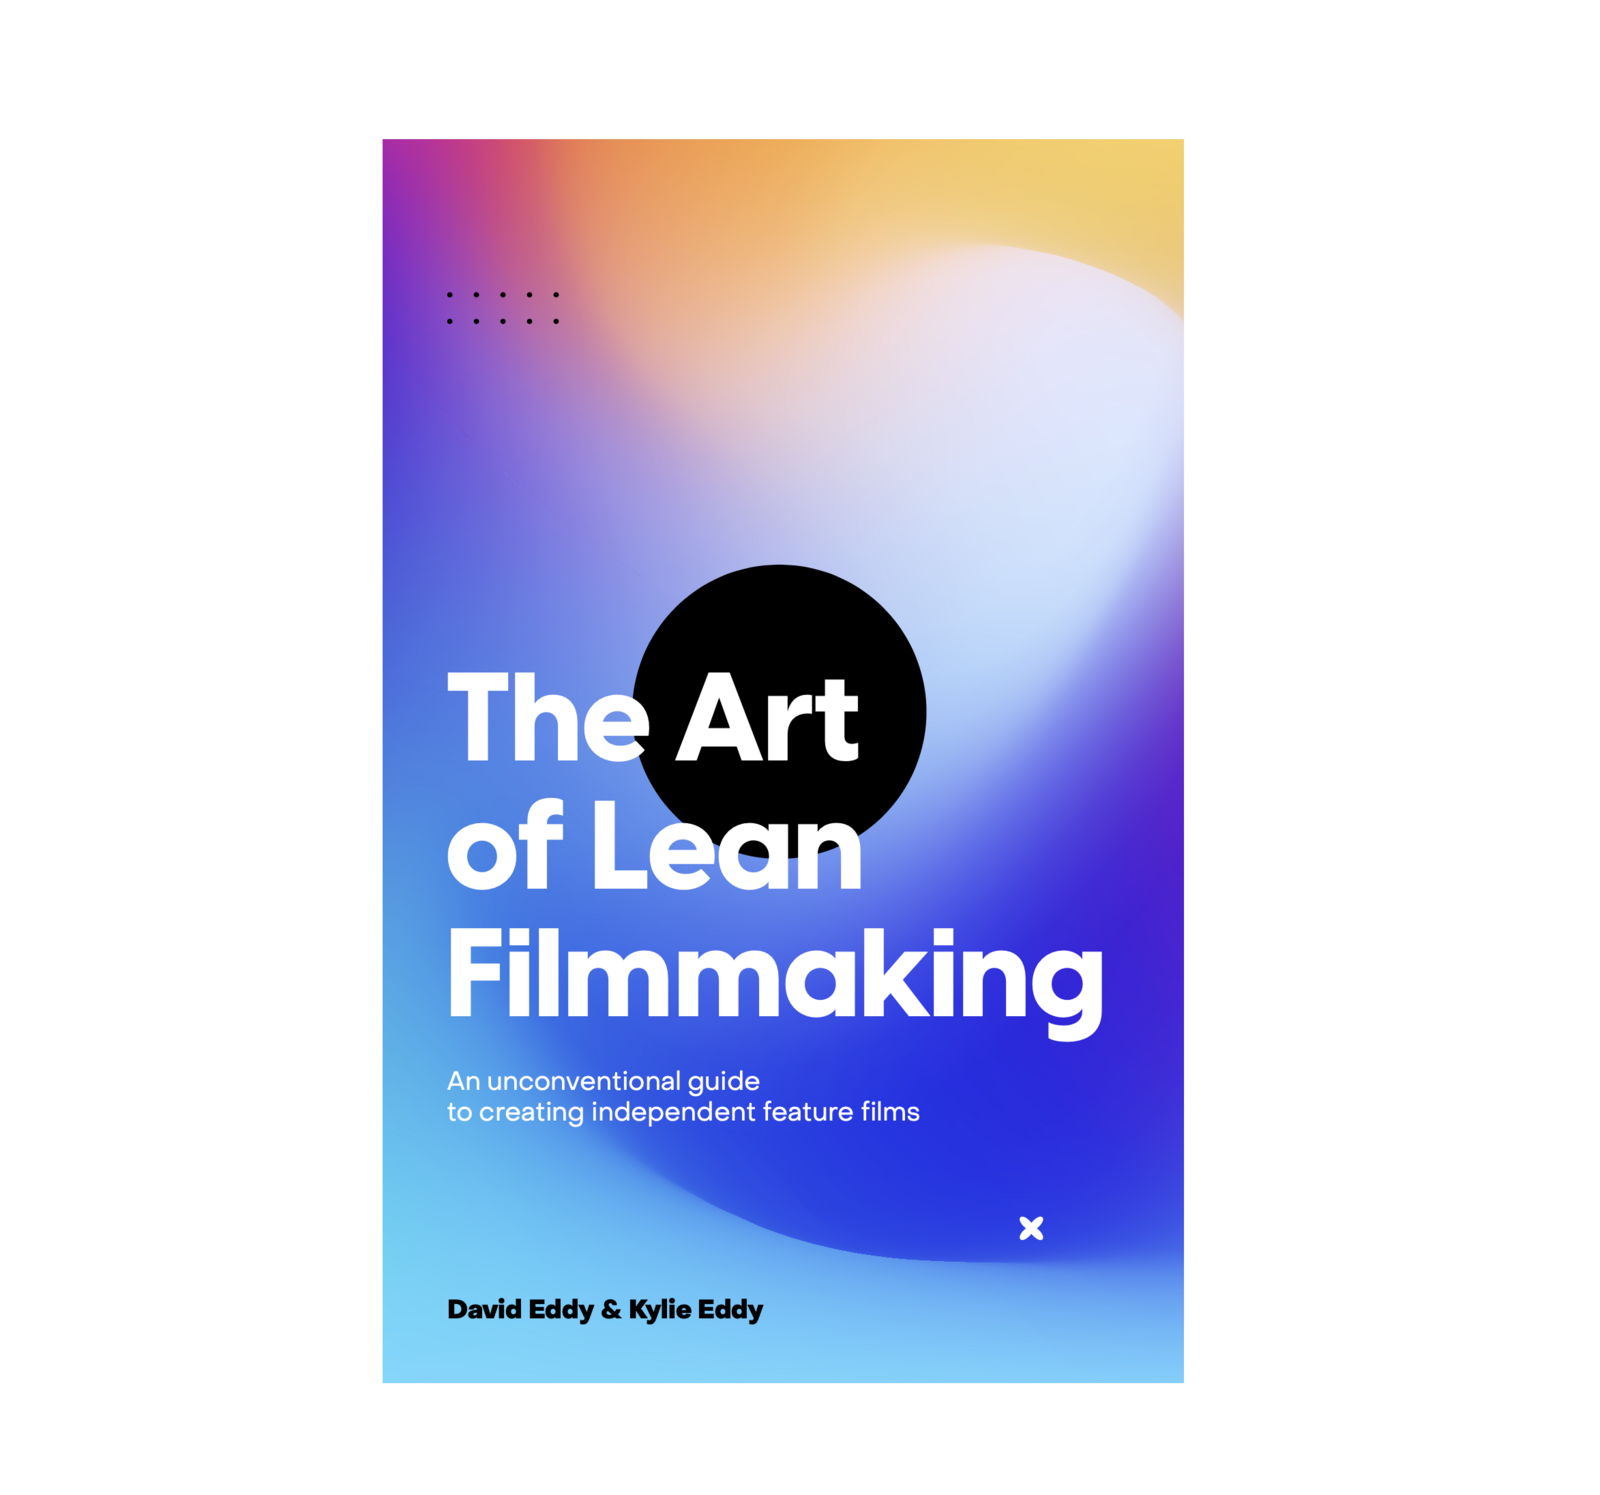 The Art of Lean Filmmaking - Book Cover Design Crystal Oliver